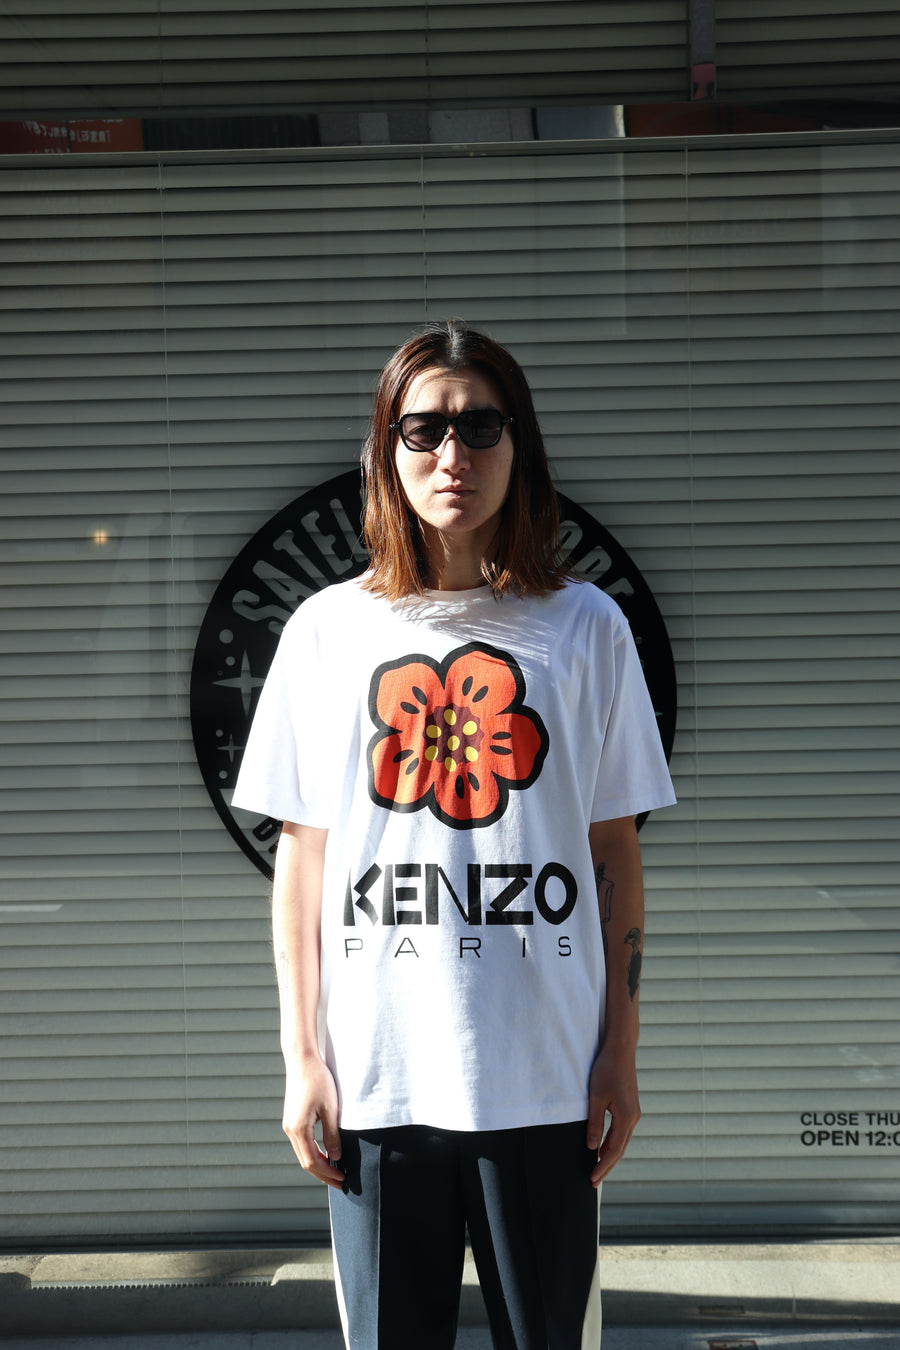 KENZO  BOKE FLOWER CLASSIC T-SHIRT-2(WHITE)